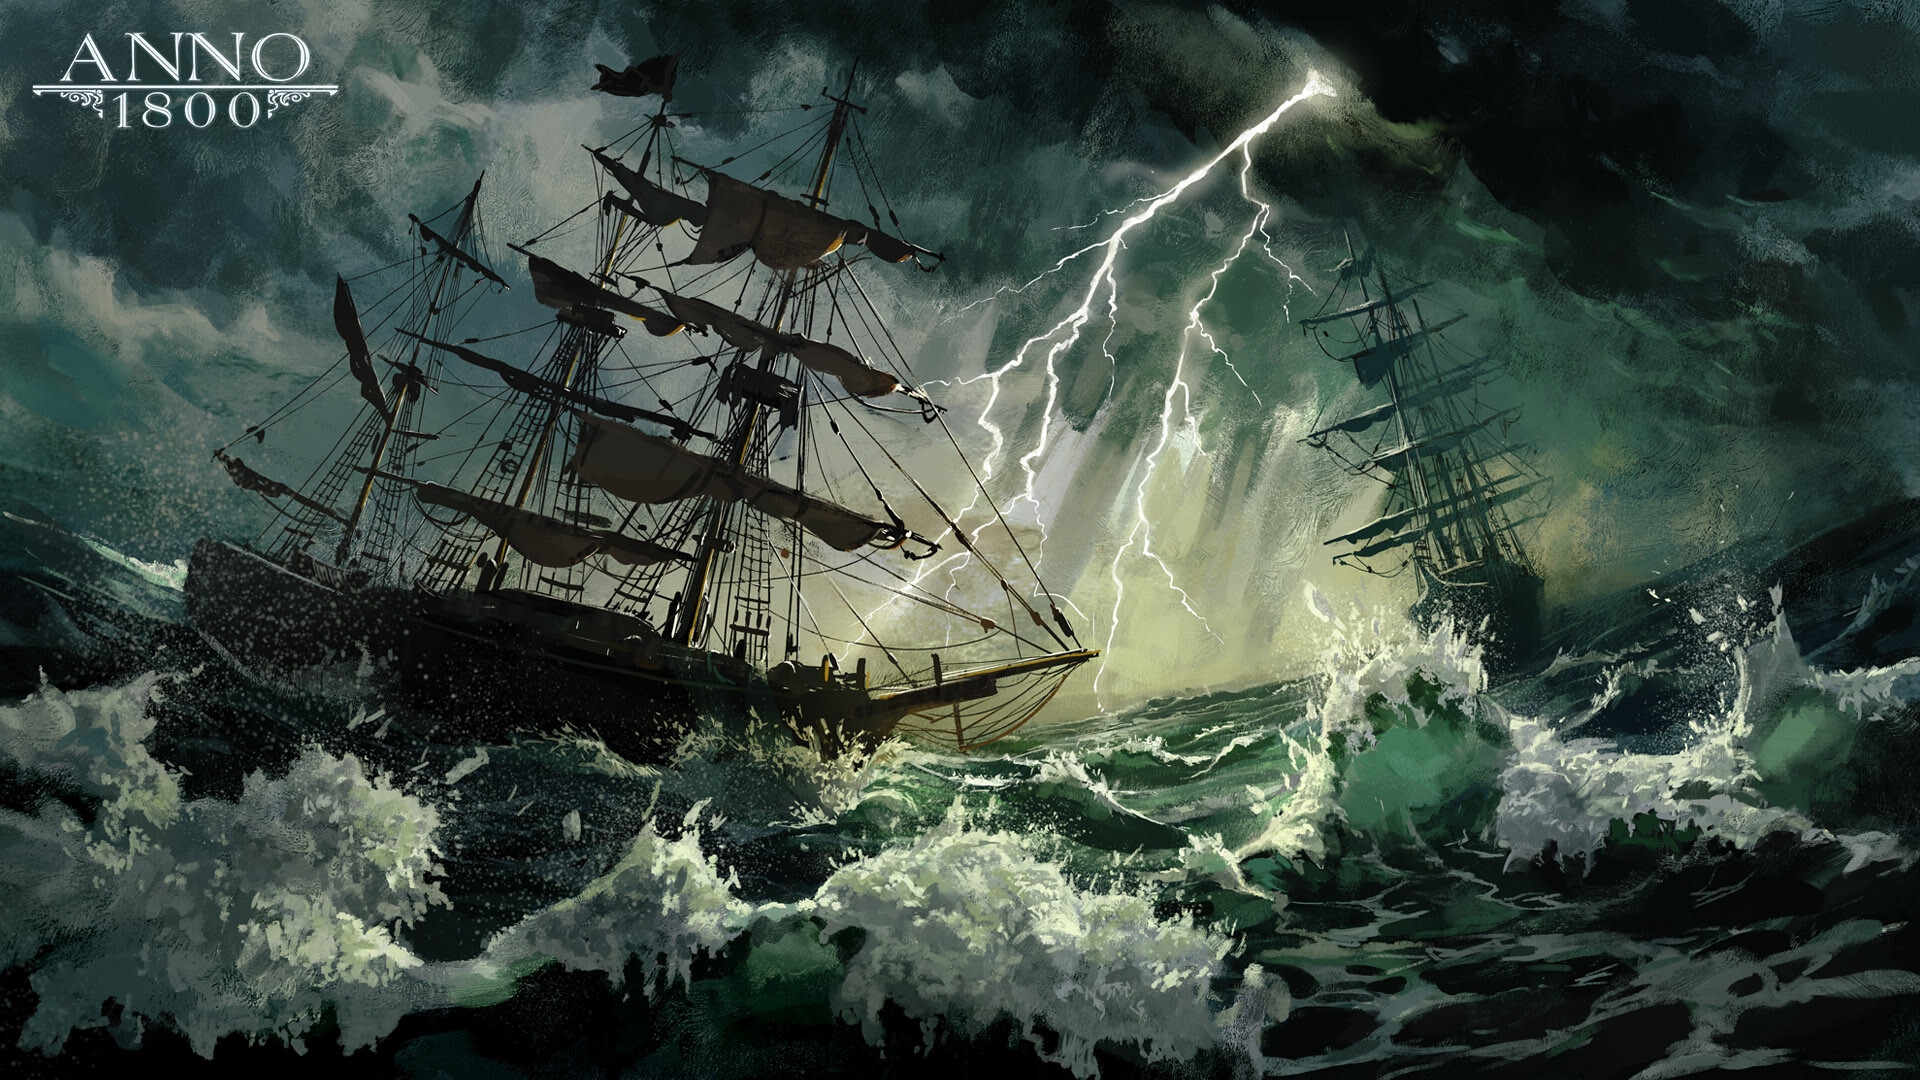 Anno 1800 1800s Digital Art Concept Art Artwork Ubisoft Ocean Battle Sailing Ship Storm Waves Lightn 1920x1080